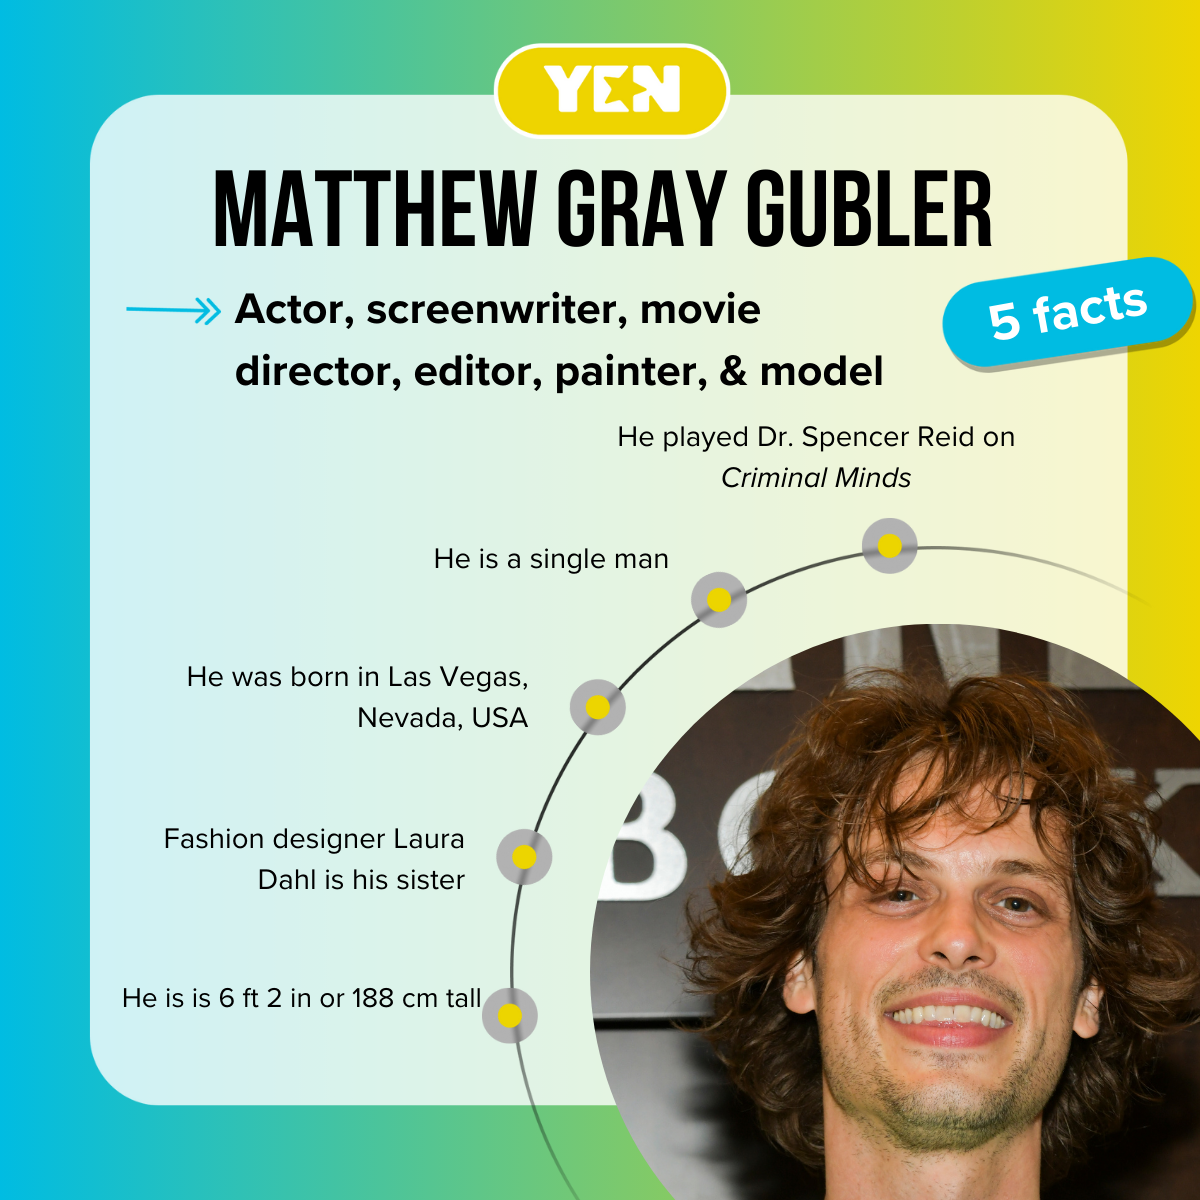 Top-5 facts about Matthew Gray Gubler